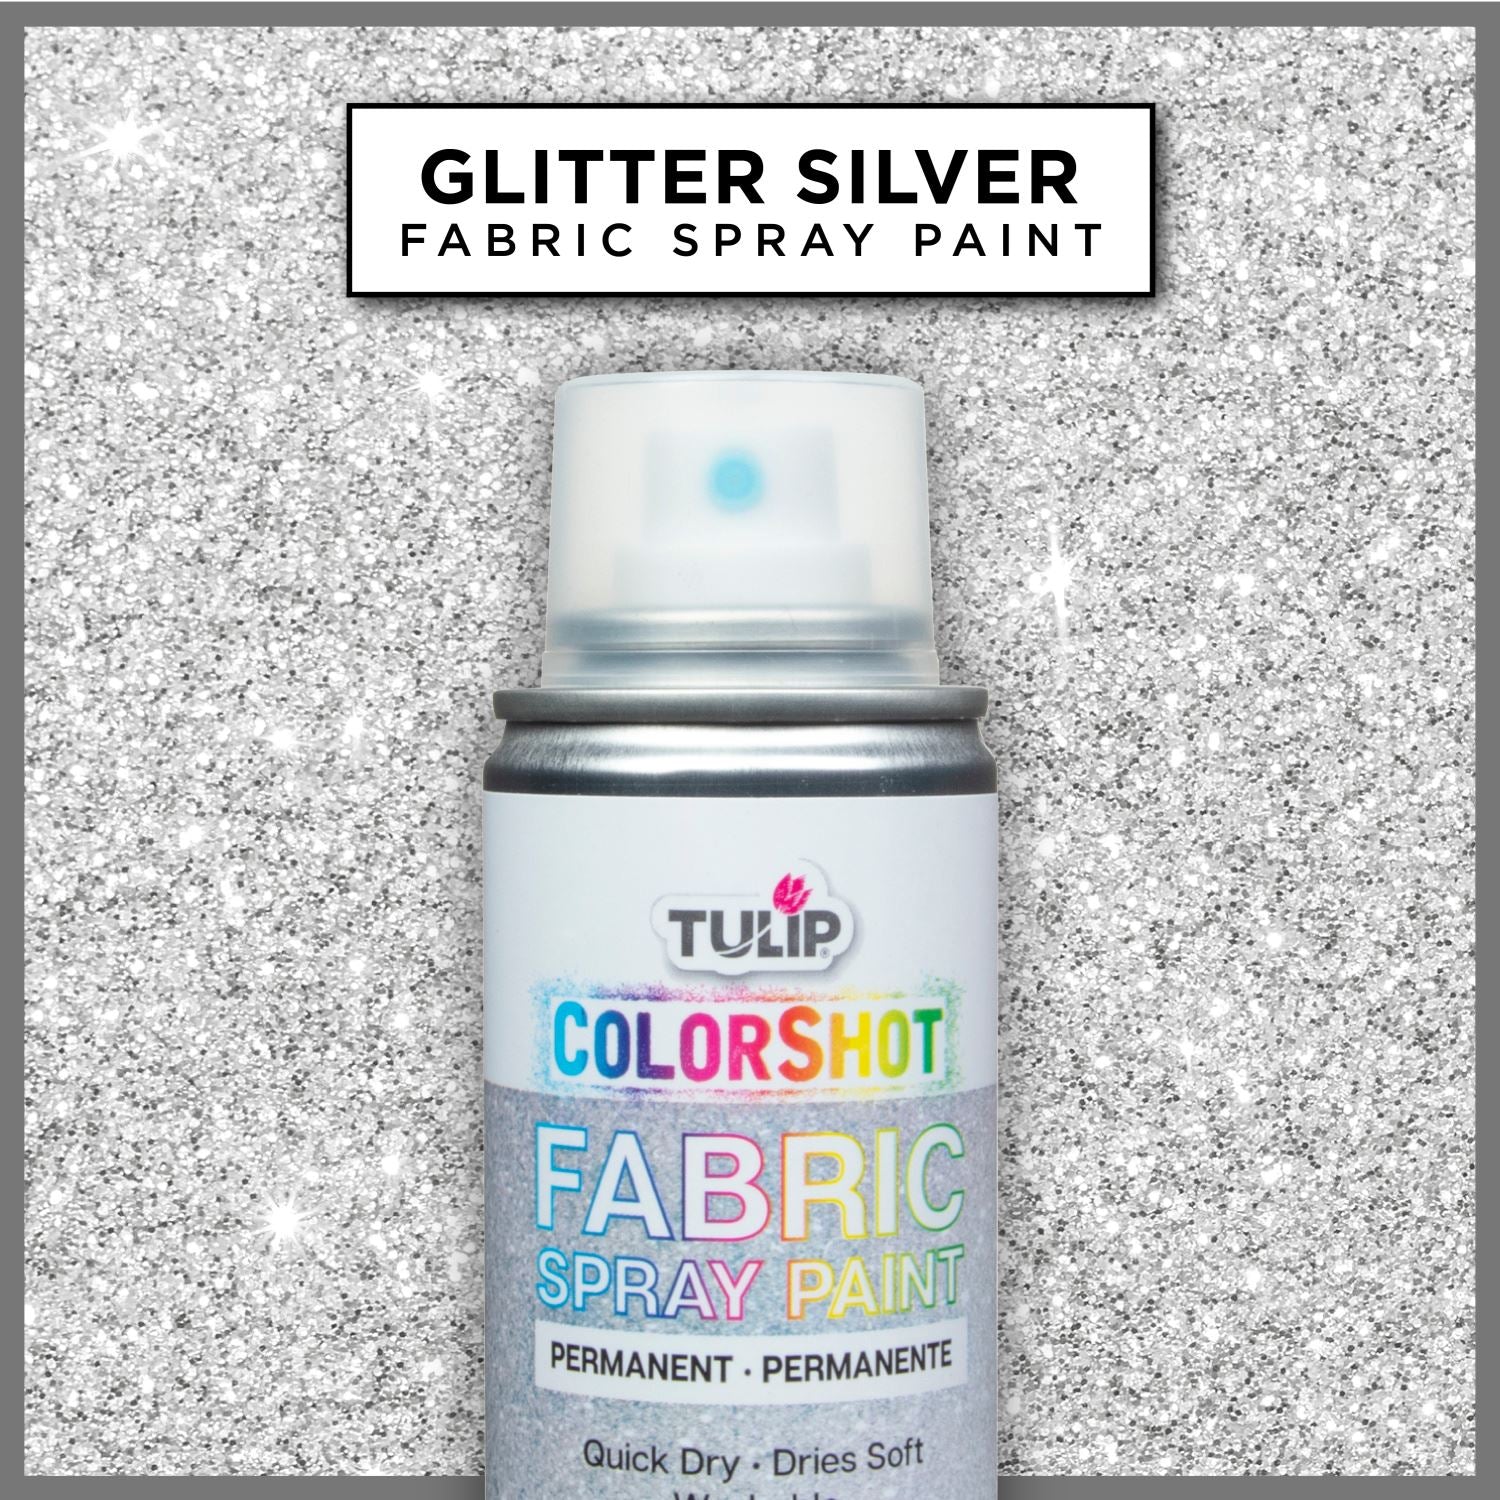 iLoveToCreate  Tulip Fabric Spray Paint Glistening Gold Glitter 4 fl. oz.